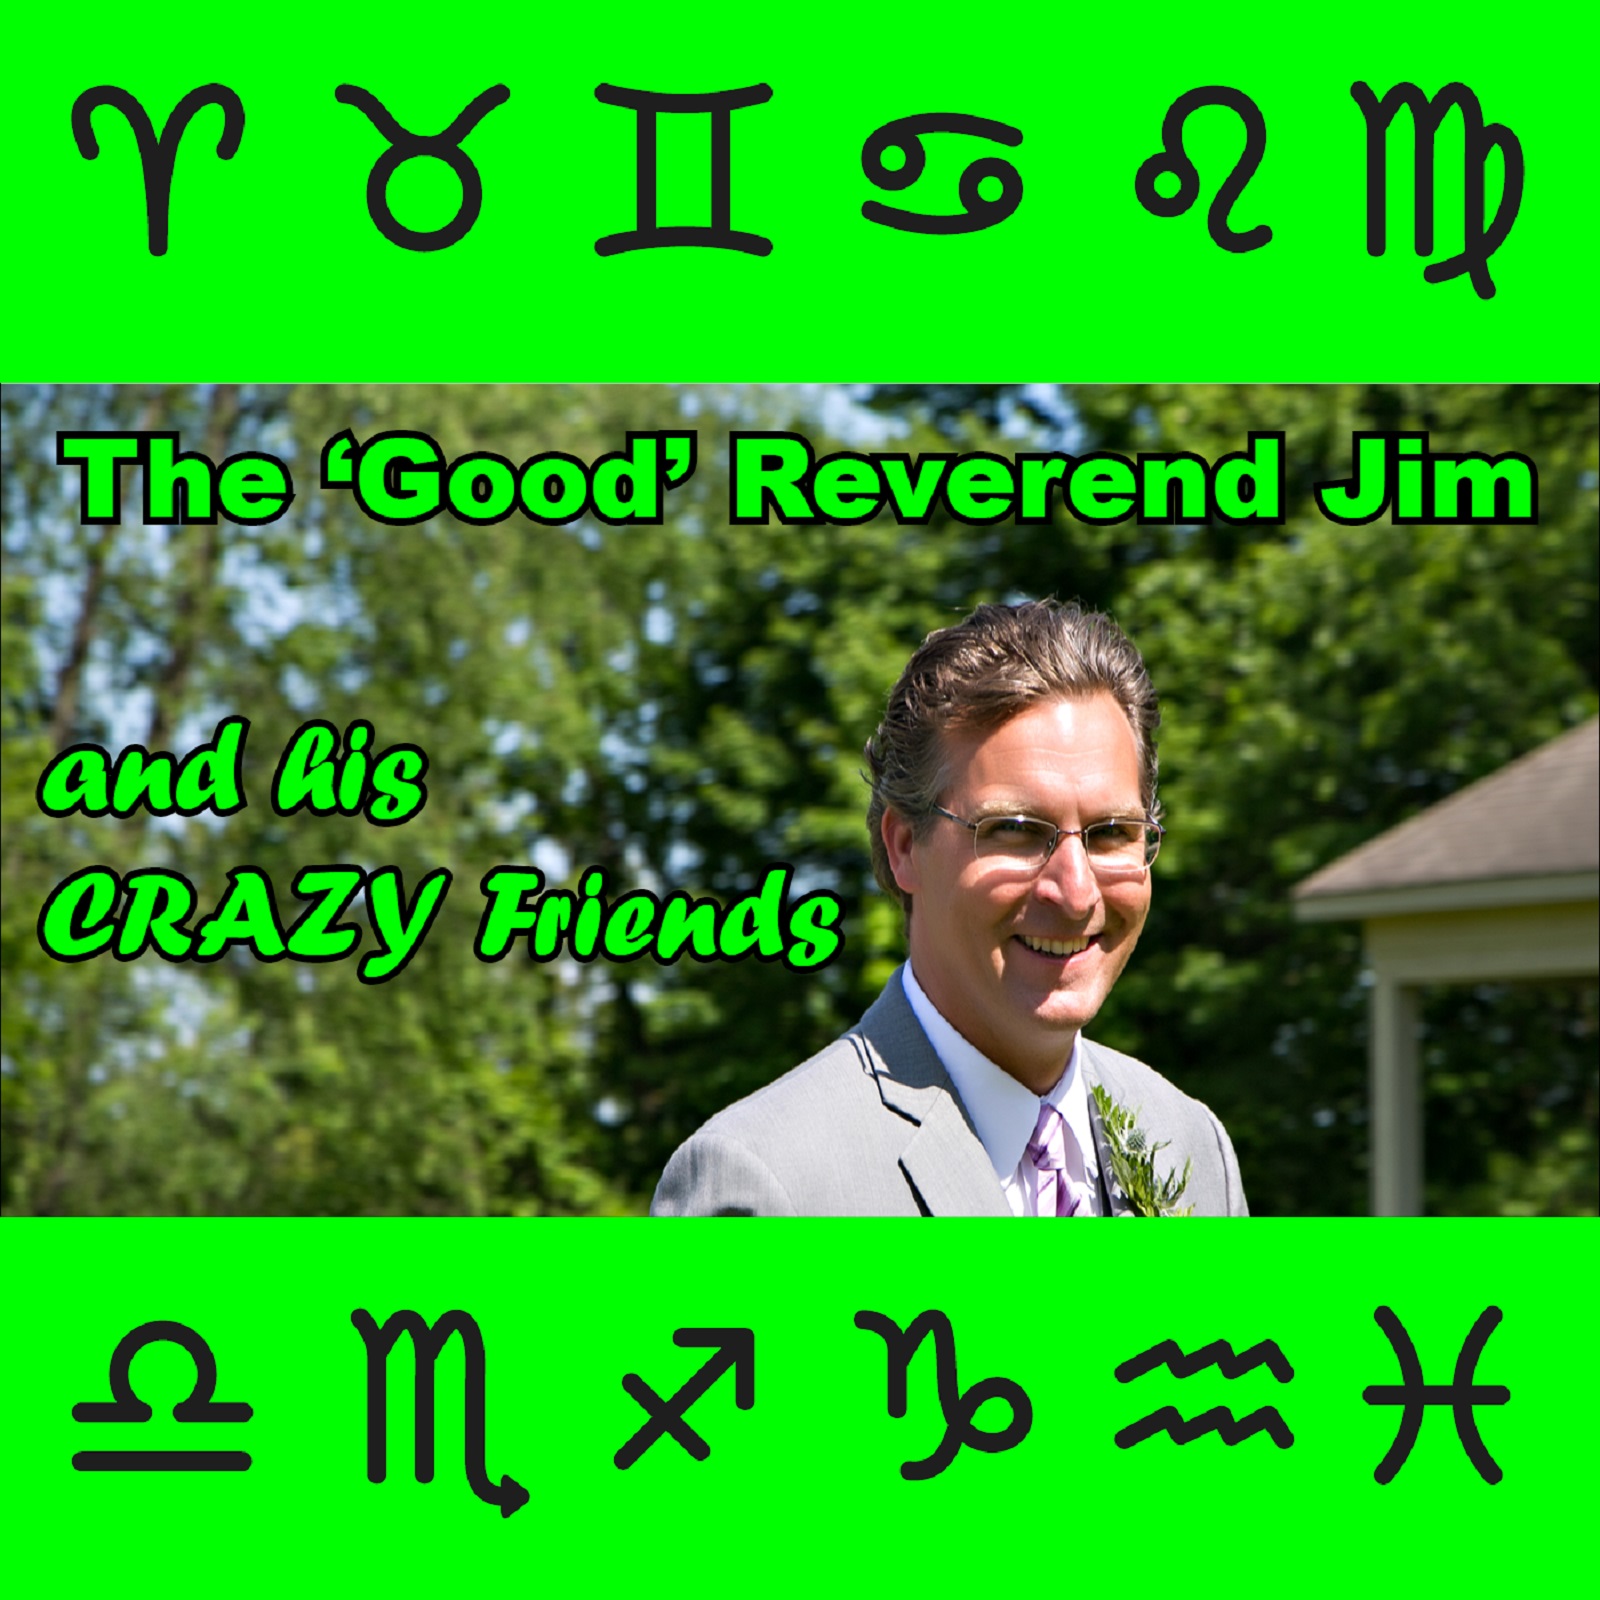 The Good Reverend Jim